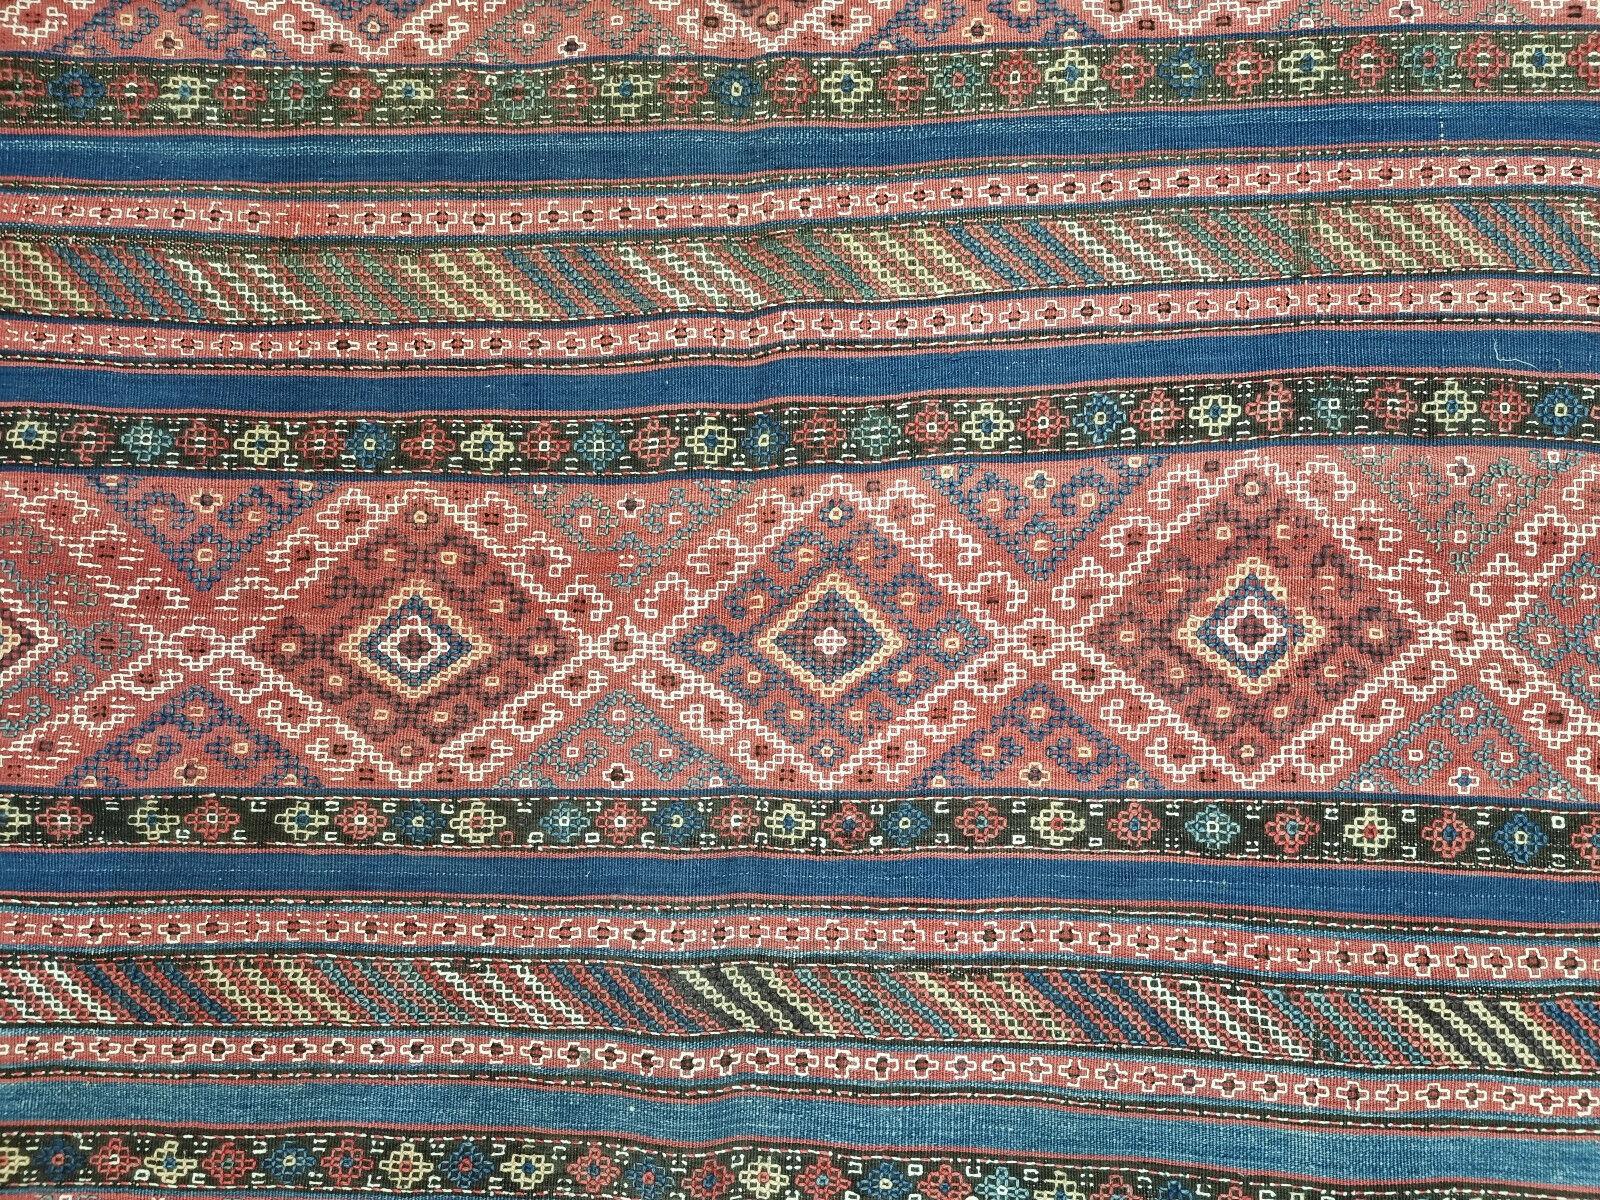 Wool Handmade Antique Persian Style Sumak Kilim Rug 5.4' x 7', 1920s - 1D86